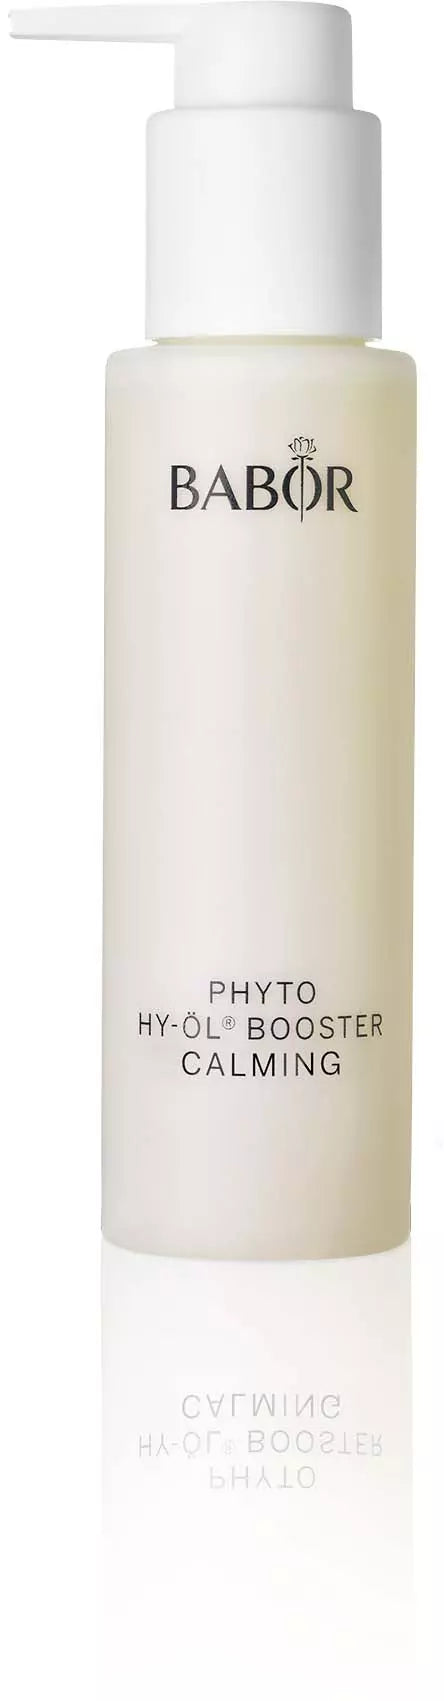 Babor
Phyto HY-ÖL Booster Calming 100ml